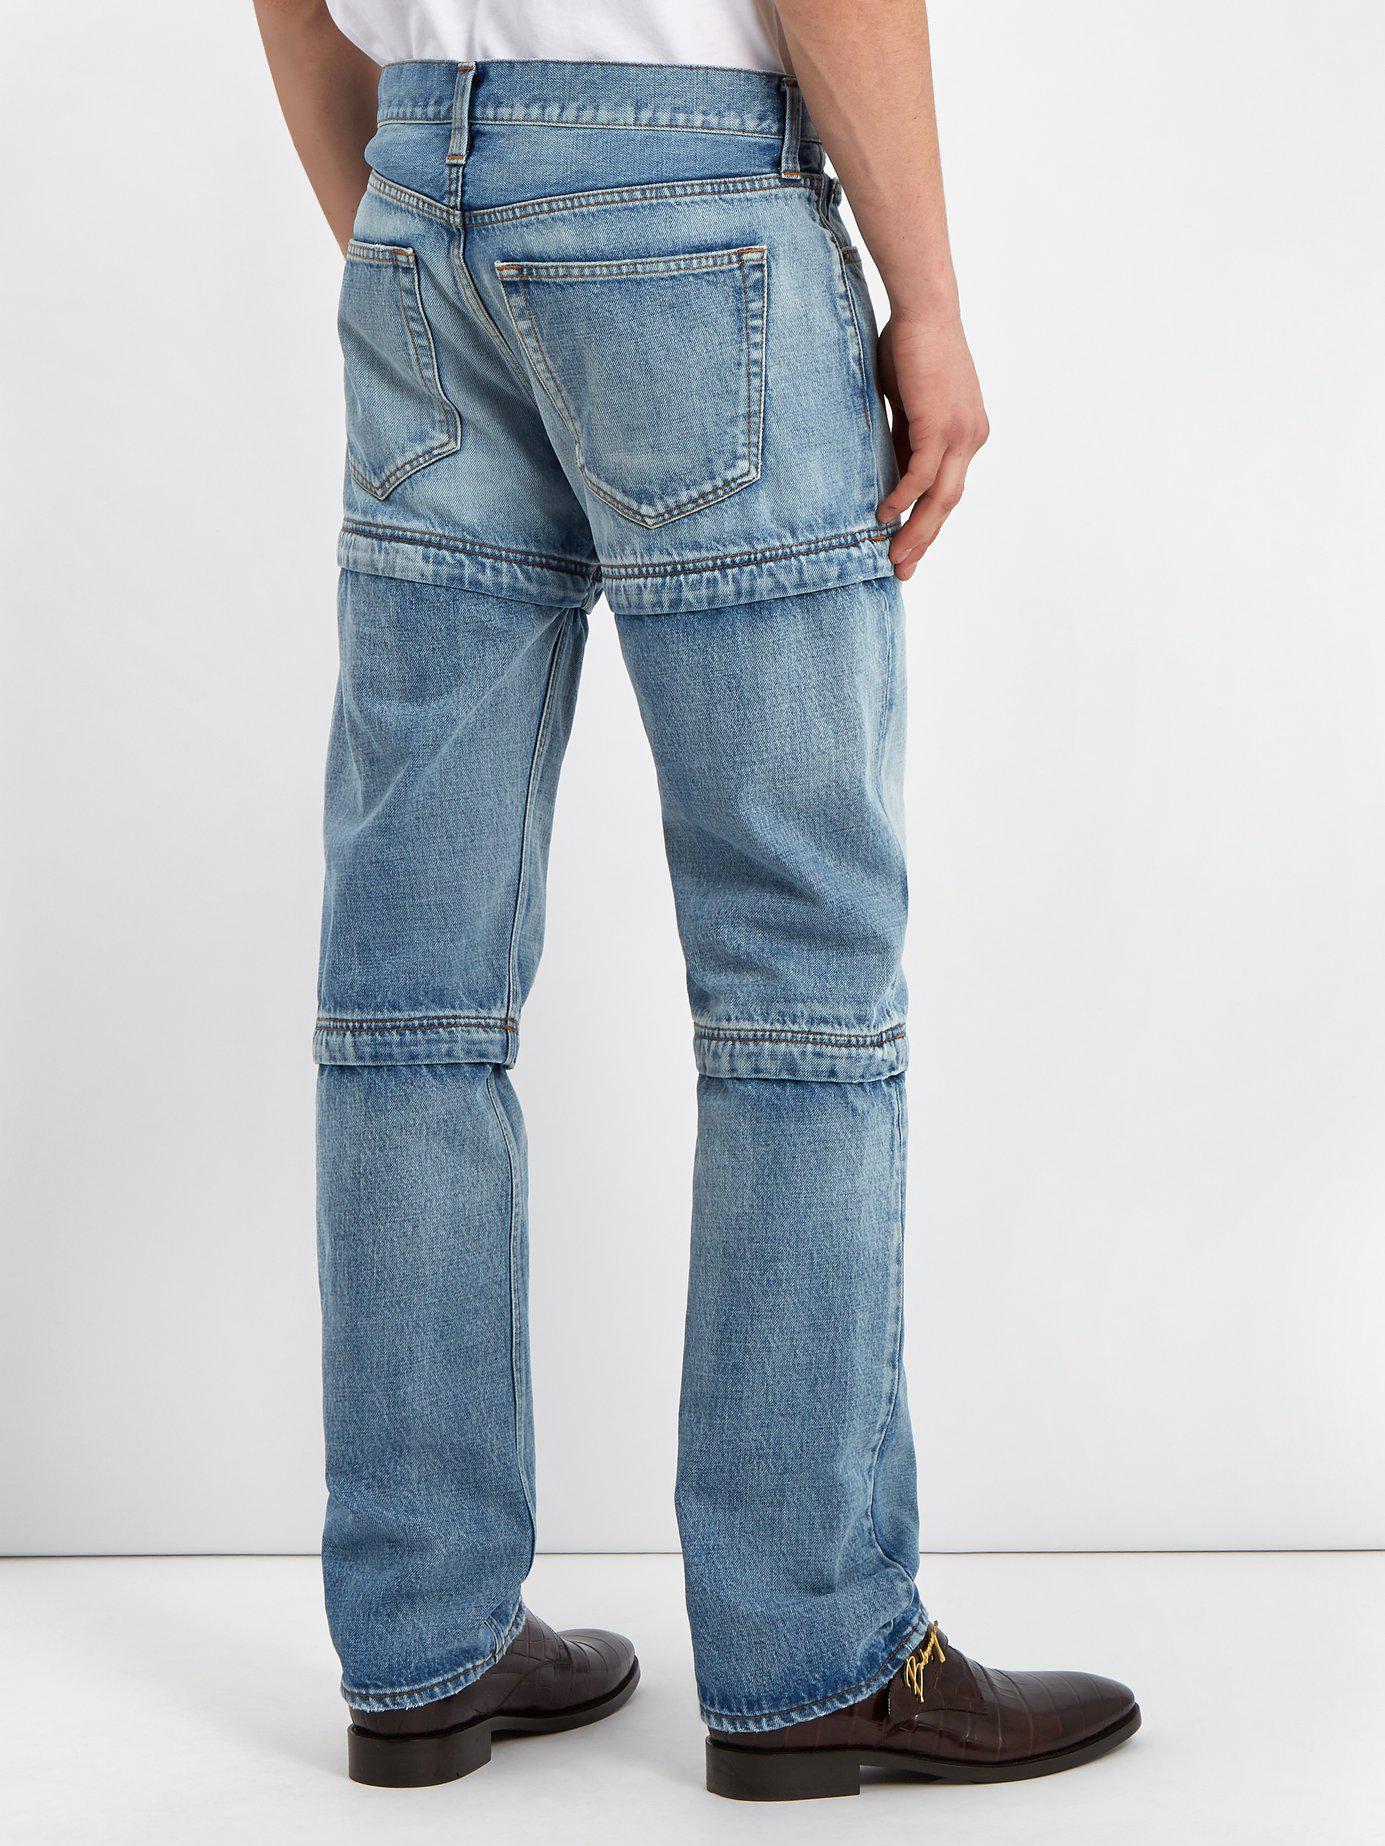 Balenciaga Denim Triple Hem Straight Leg Jeans in Blue for Men - Lyst